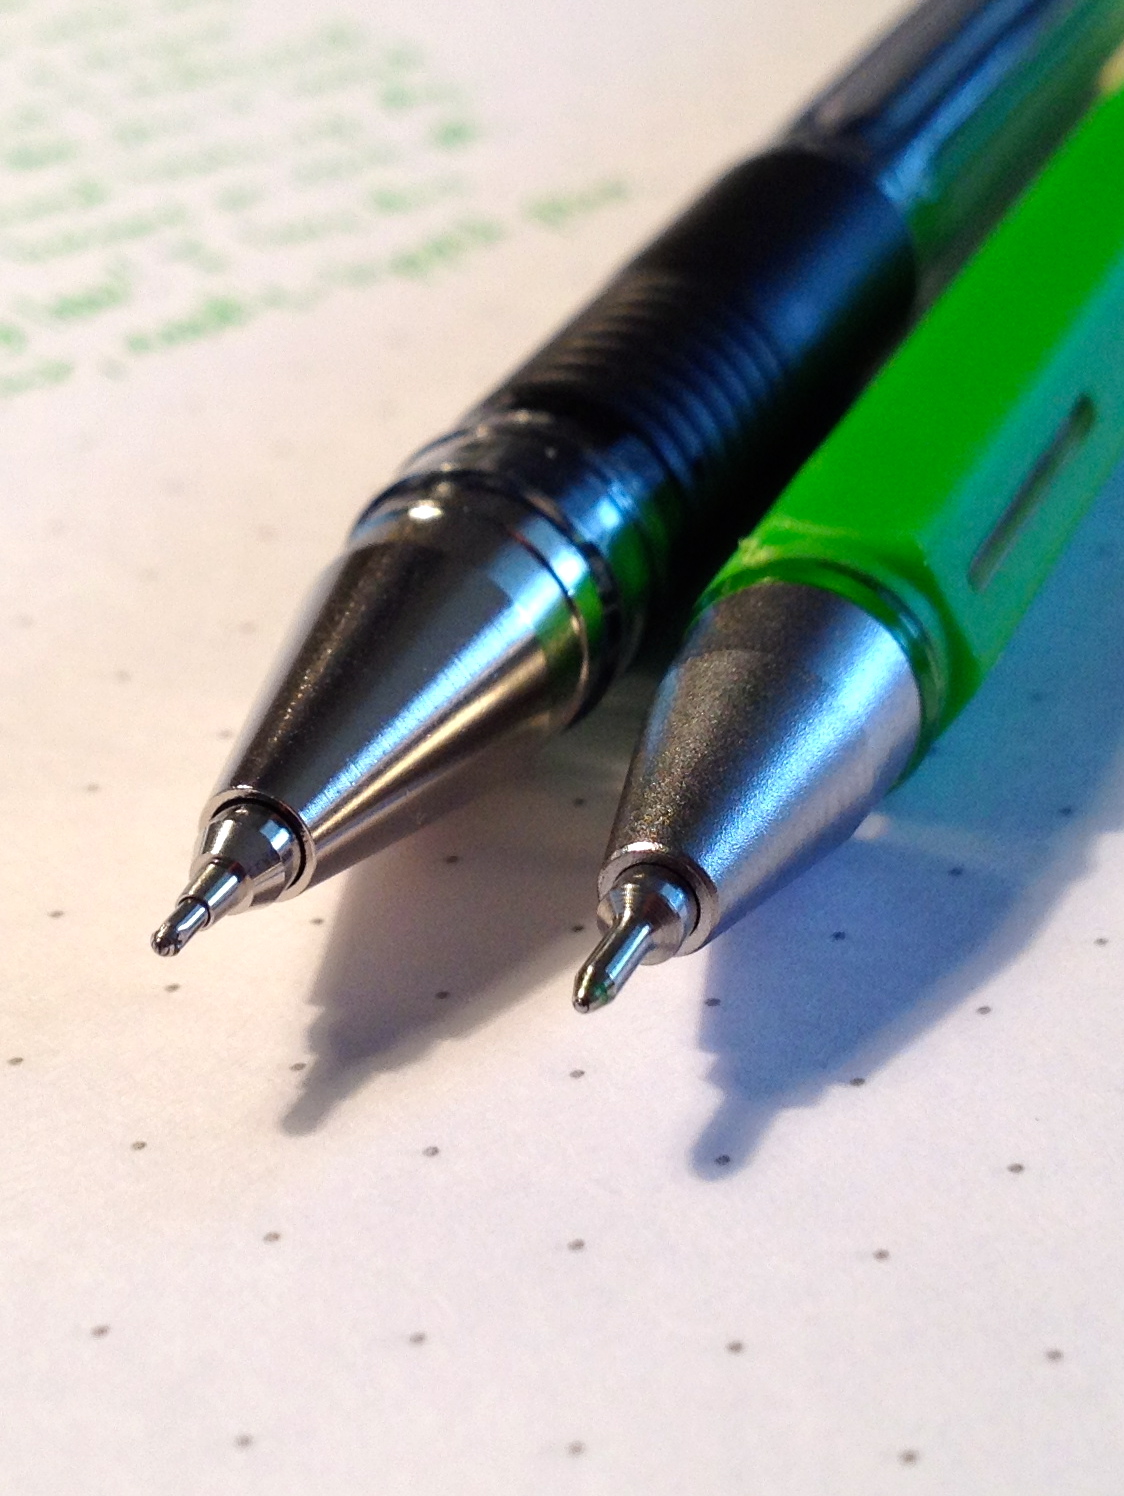 Ohto Needle-Point Slim Line 0.3mm Ballpoint Review — The Pen Addict